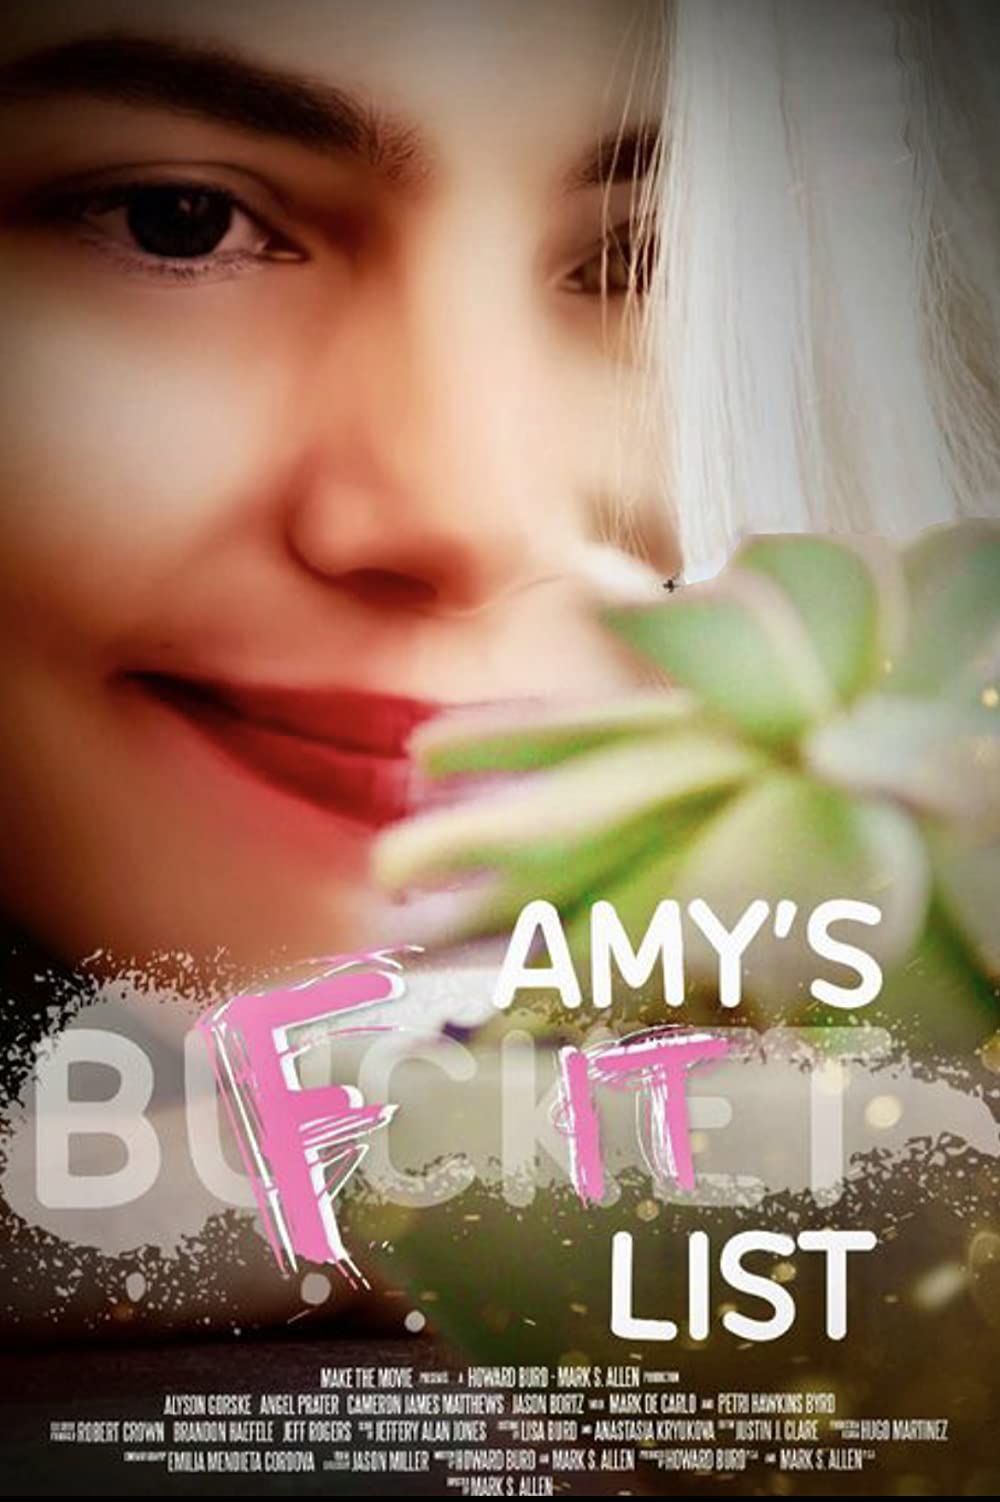 Amy’s Fucket List